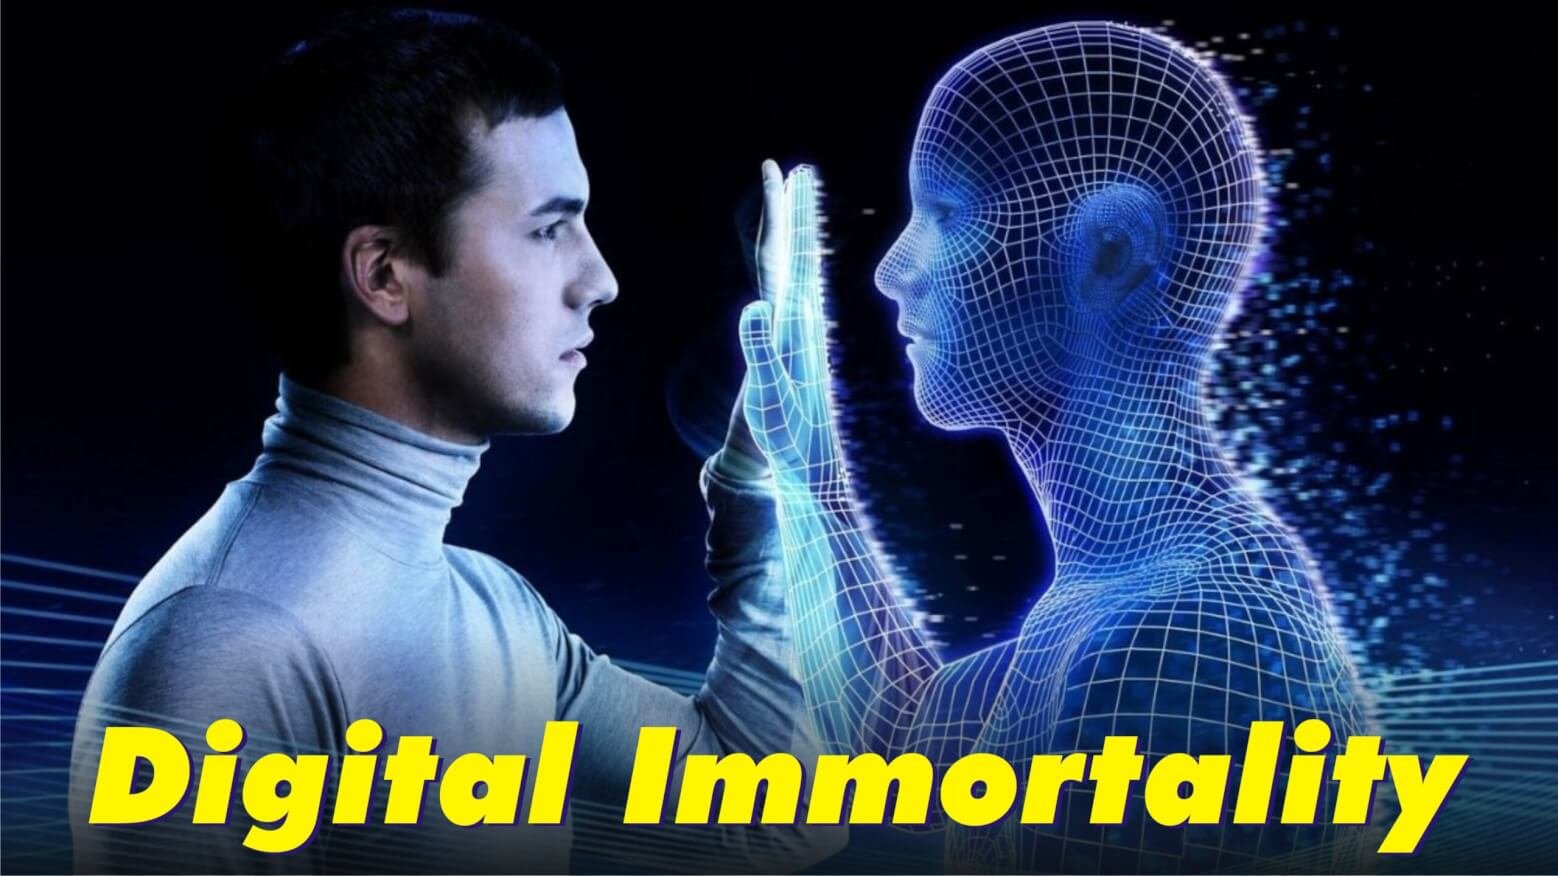 digital immortality